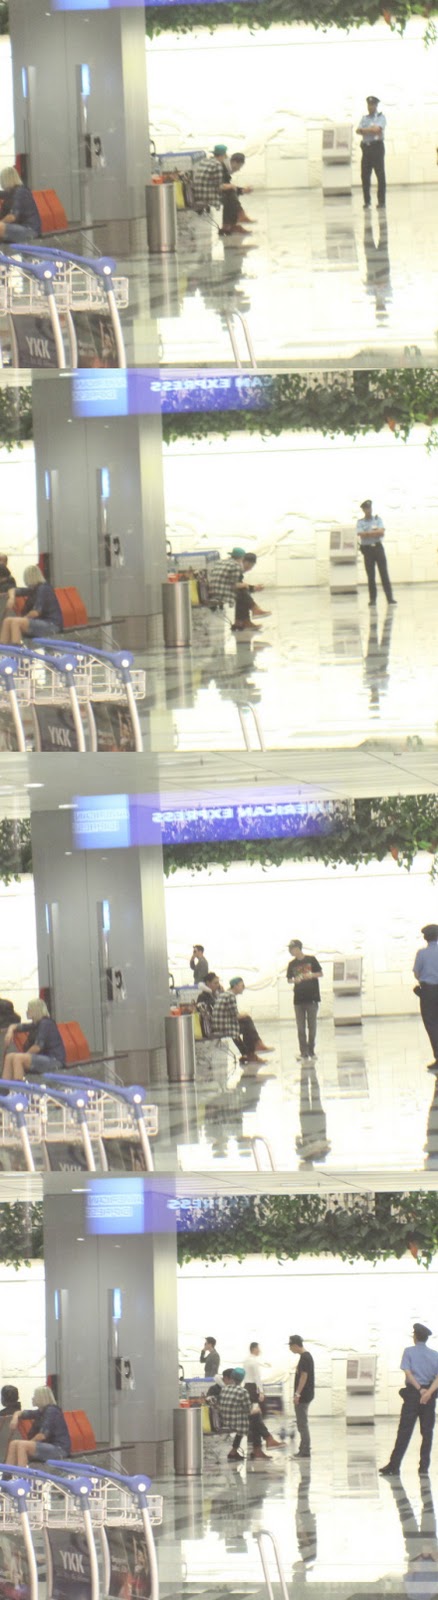 [Pics/vids] Seungri, T.O.P y G-Dragon en el aeropuerto de Changi en Singapur GDTOPVI+CHANGI+4